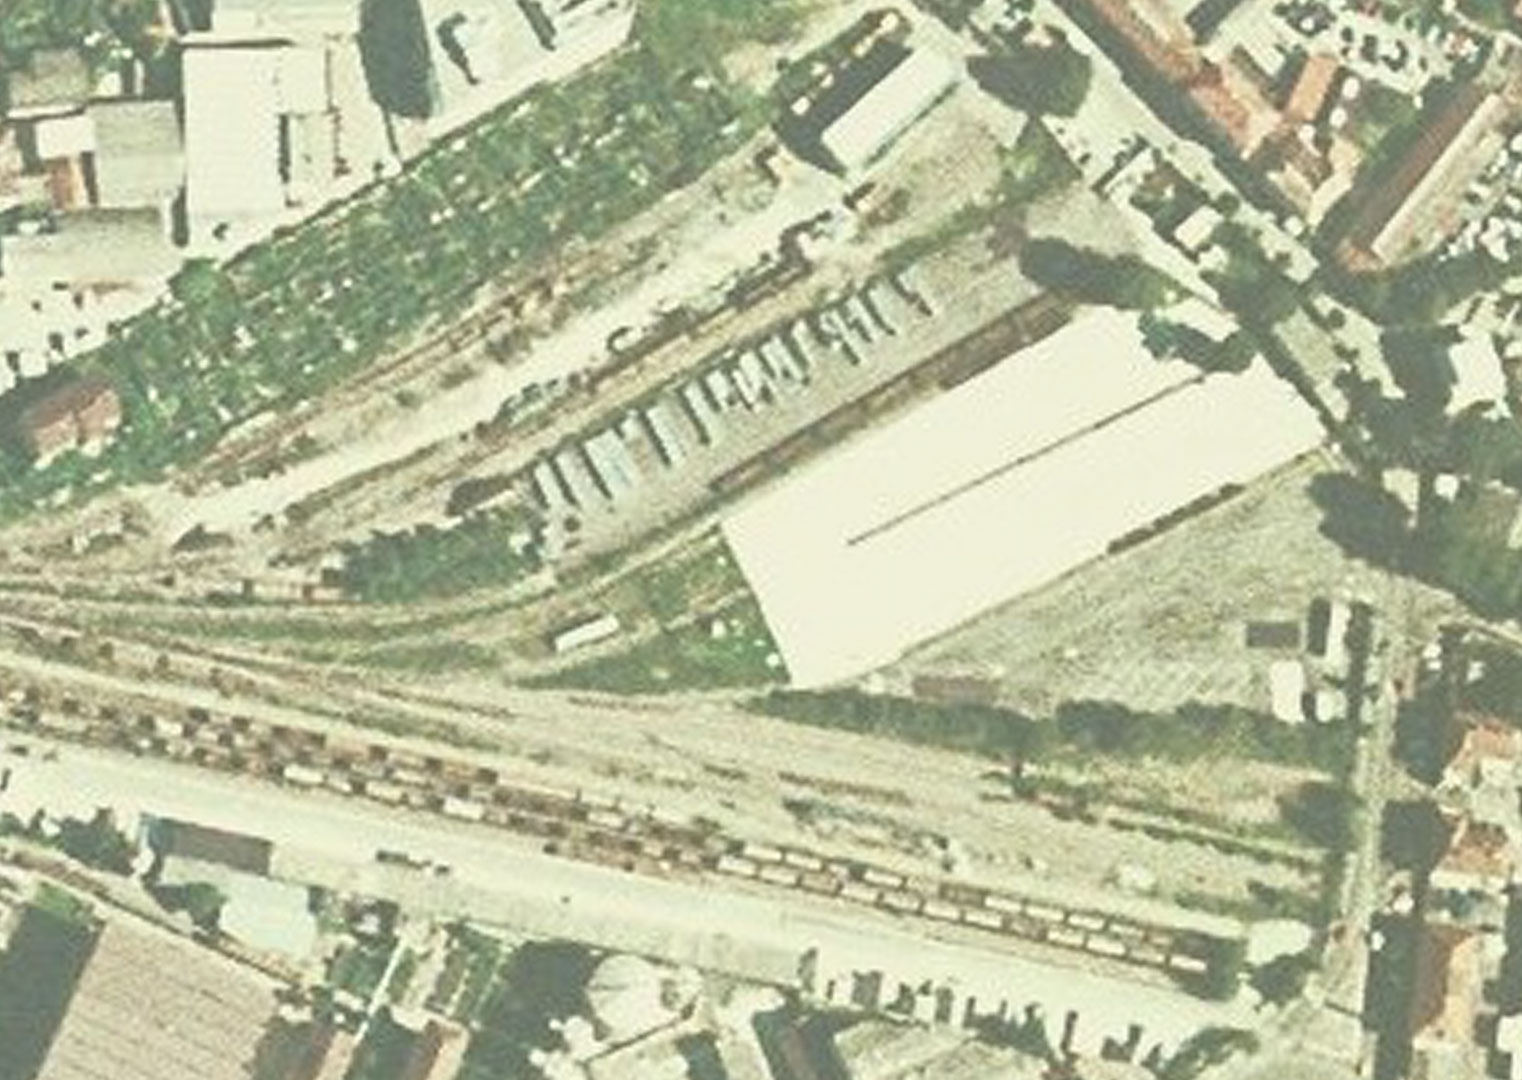 satelite image of the area 2000 http://geokatalog.buergernetz.bz.it/geokatalog/